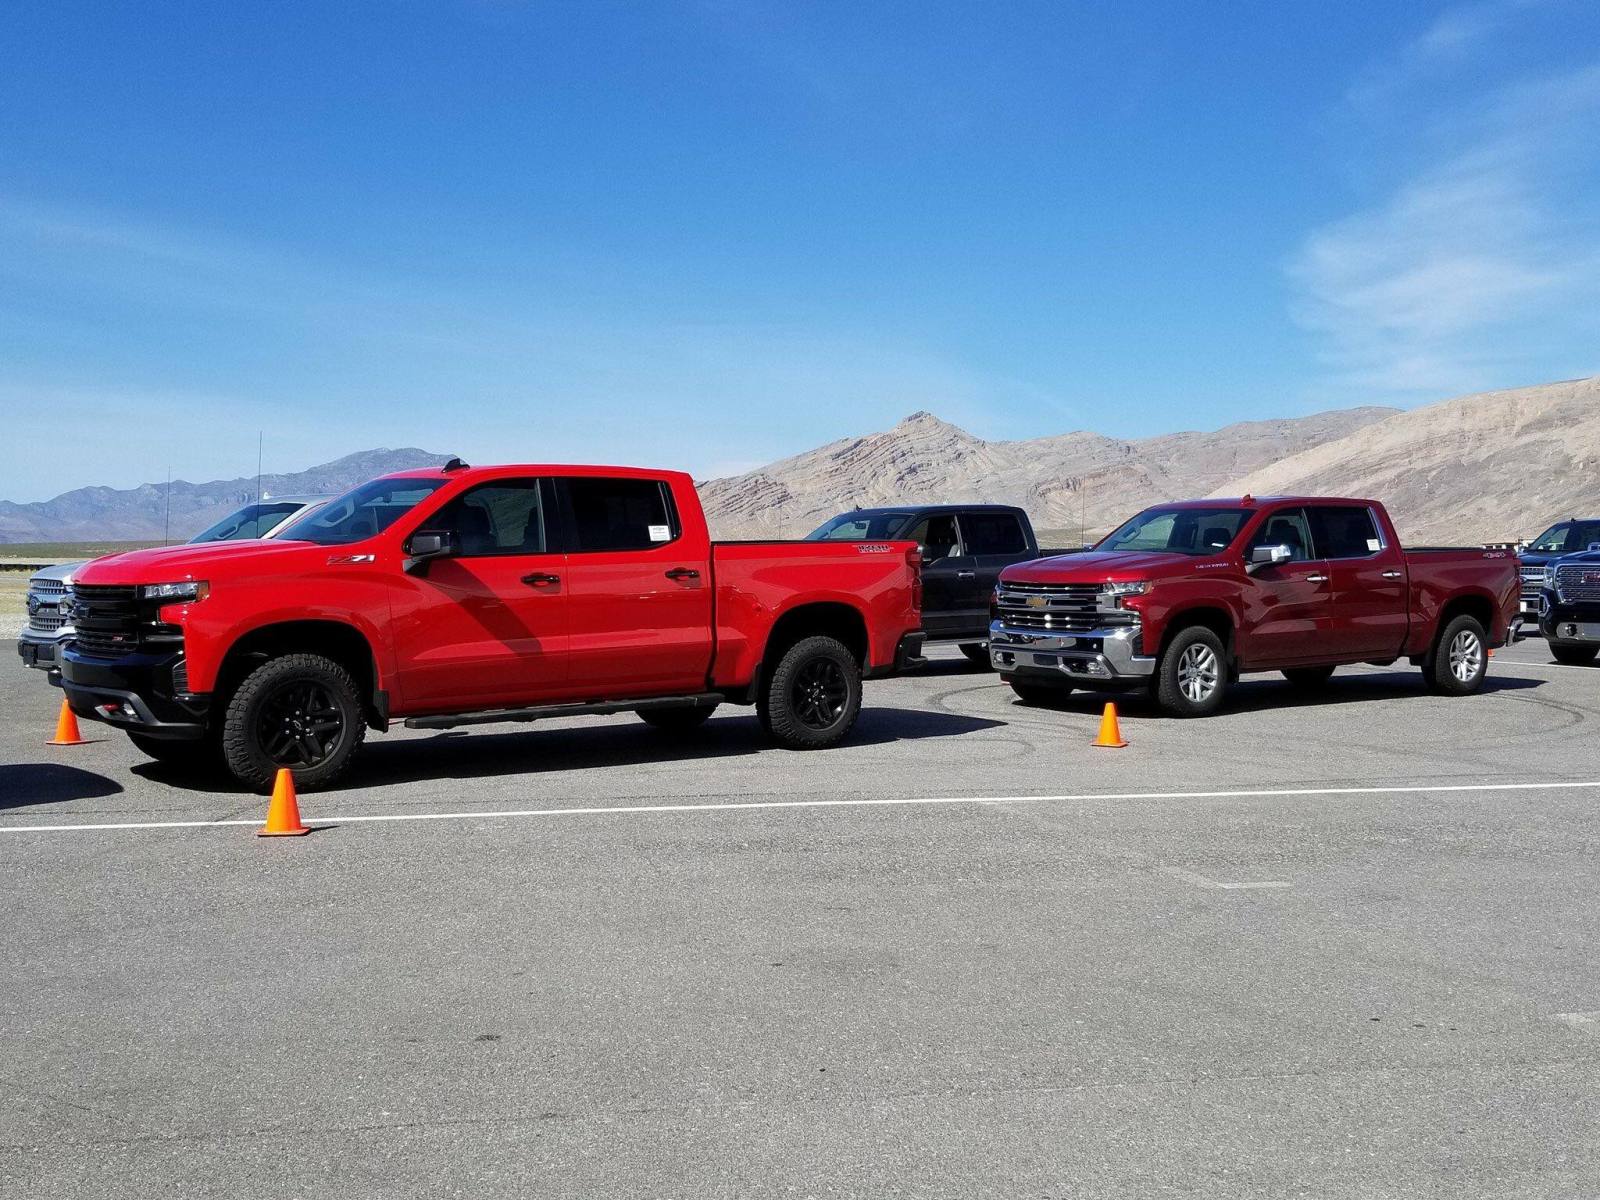 2019 Chevrolet Silverado 1500 at 2018 Chevrolet National Dealer Conference - Las Vegas - April 2018 015